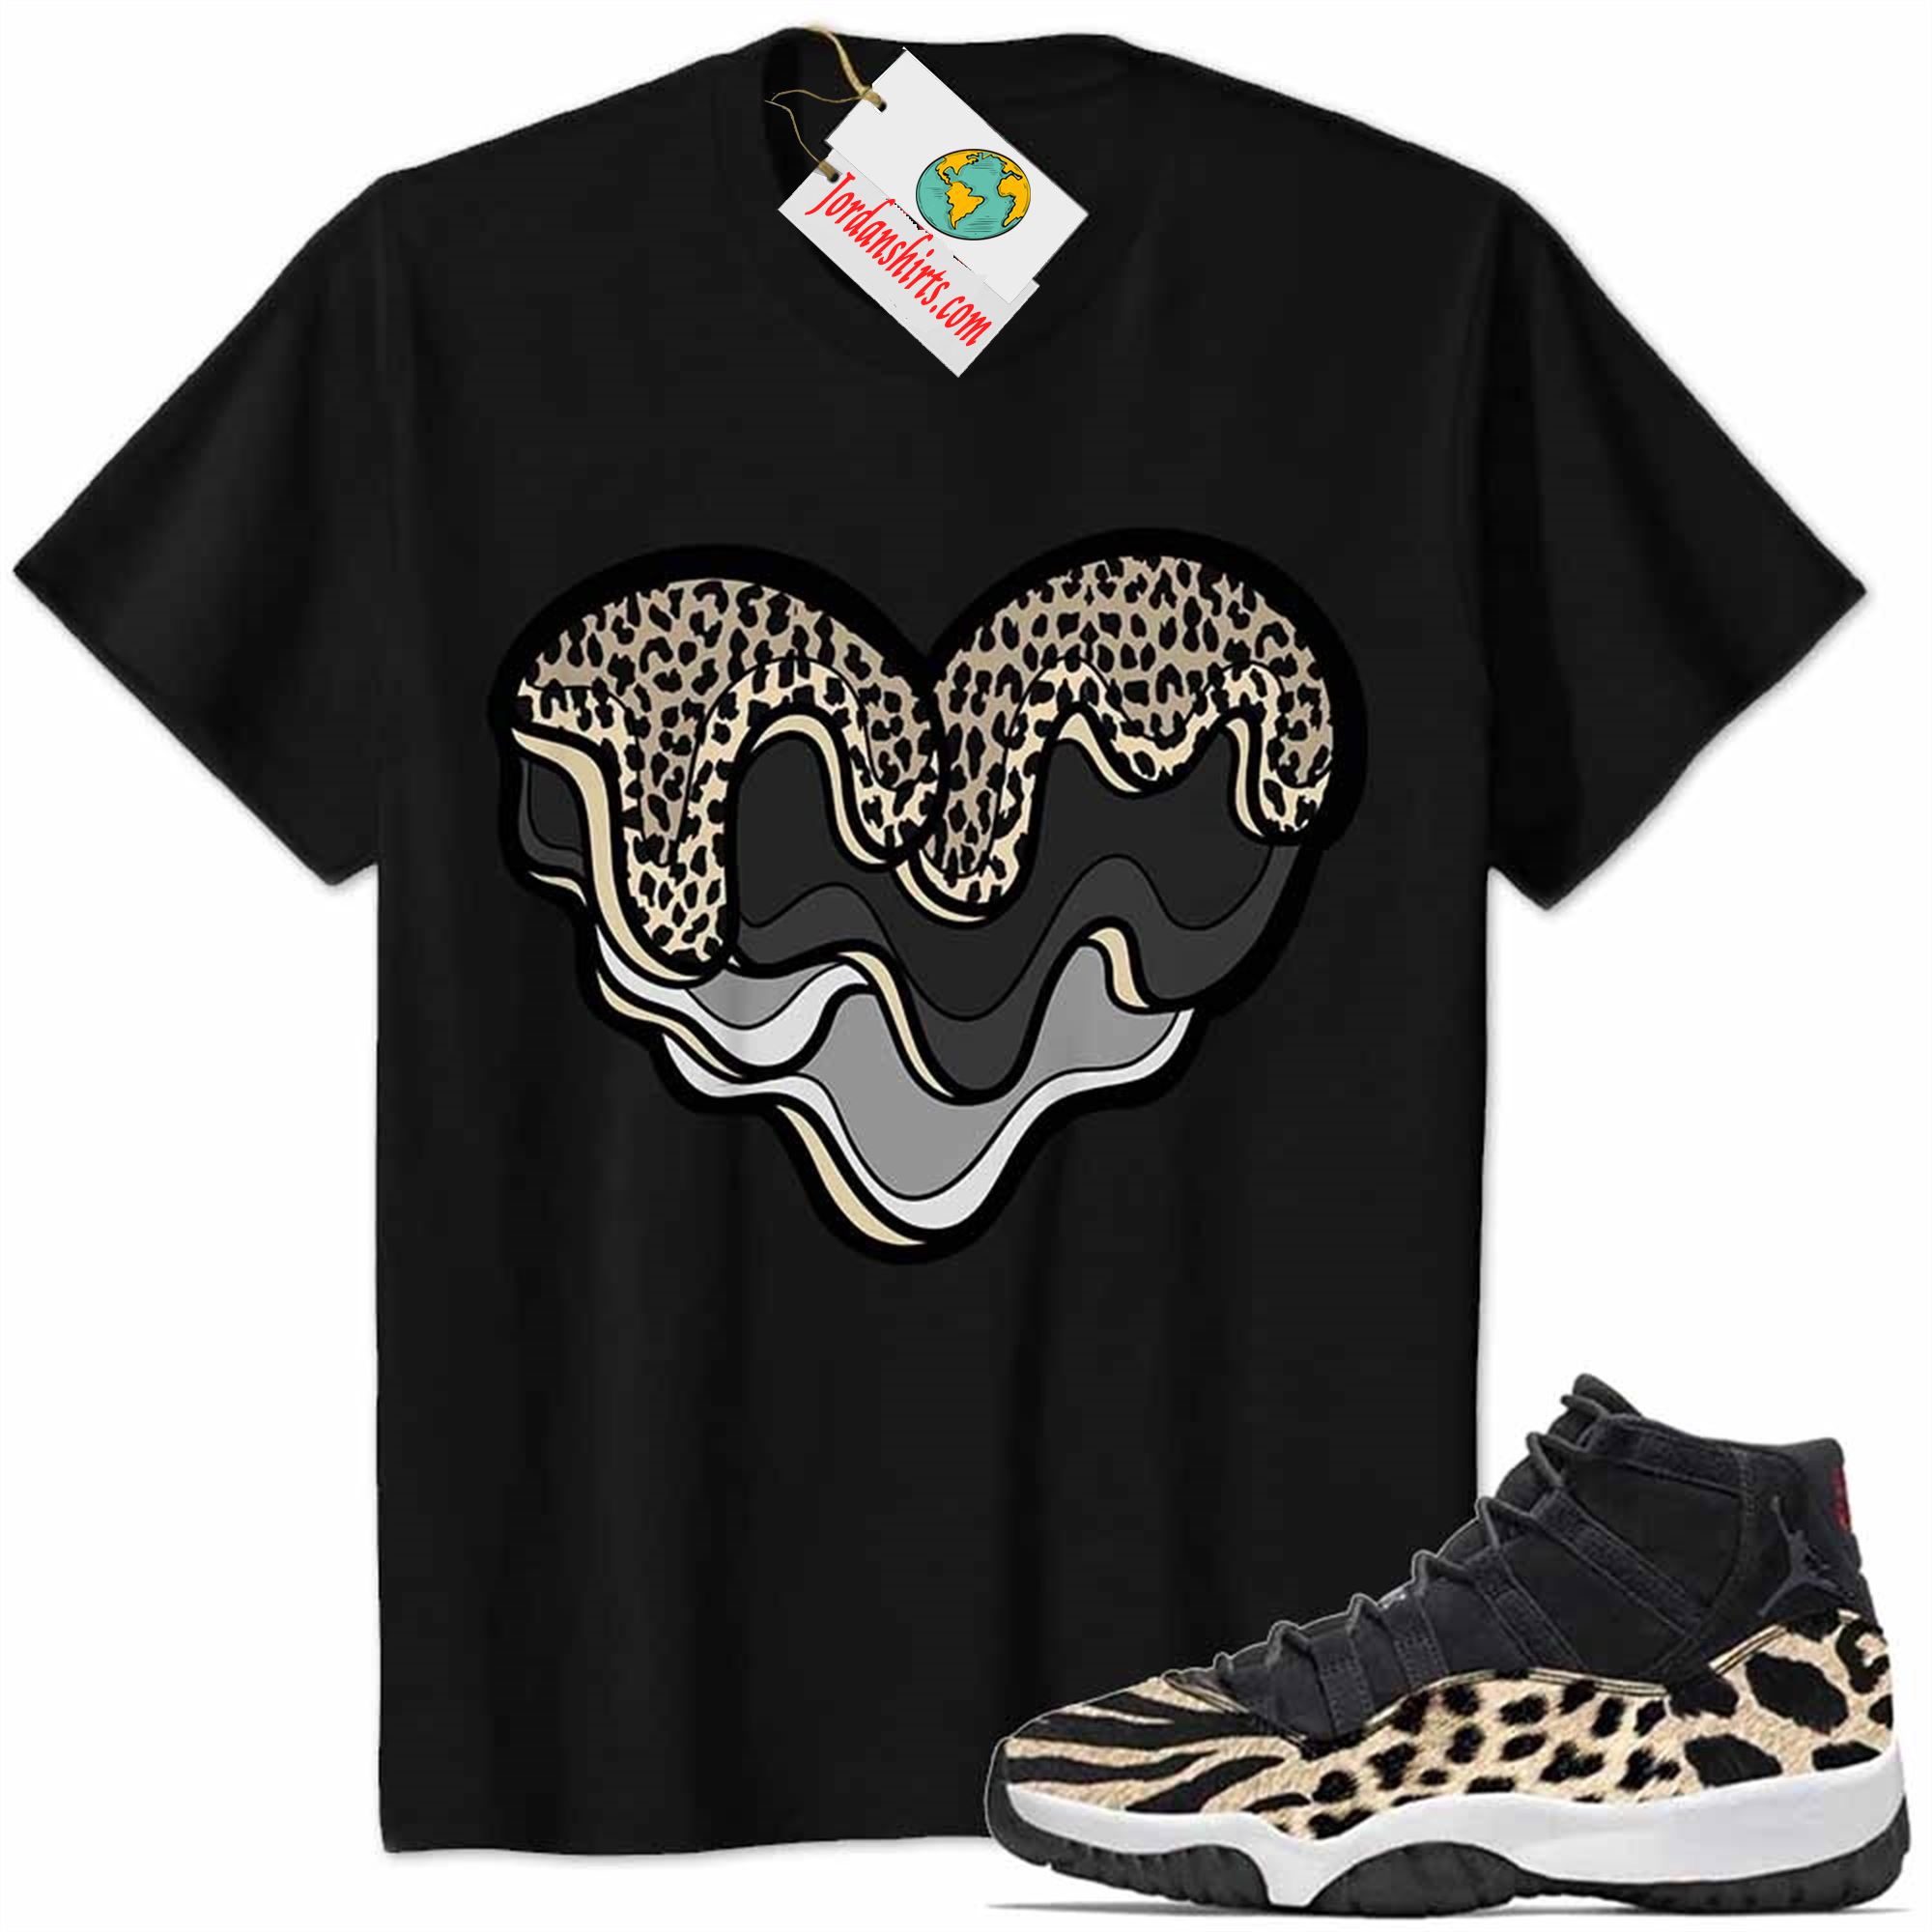 Jordan 11 Shirt, Melt Dripping Heart Black Air Jordan 11 Animal Print 11s Size Up To 5xl